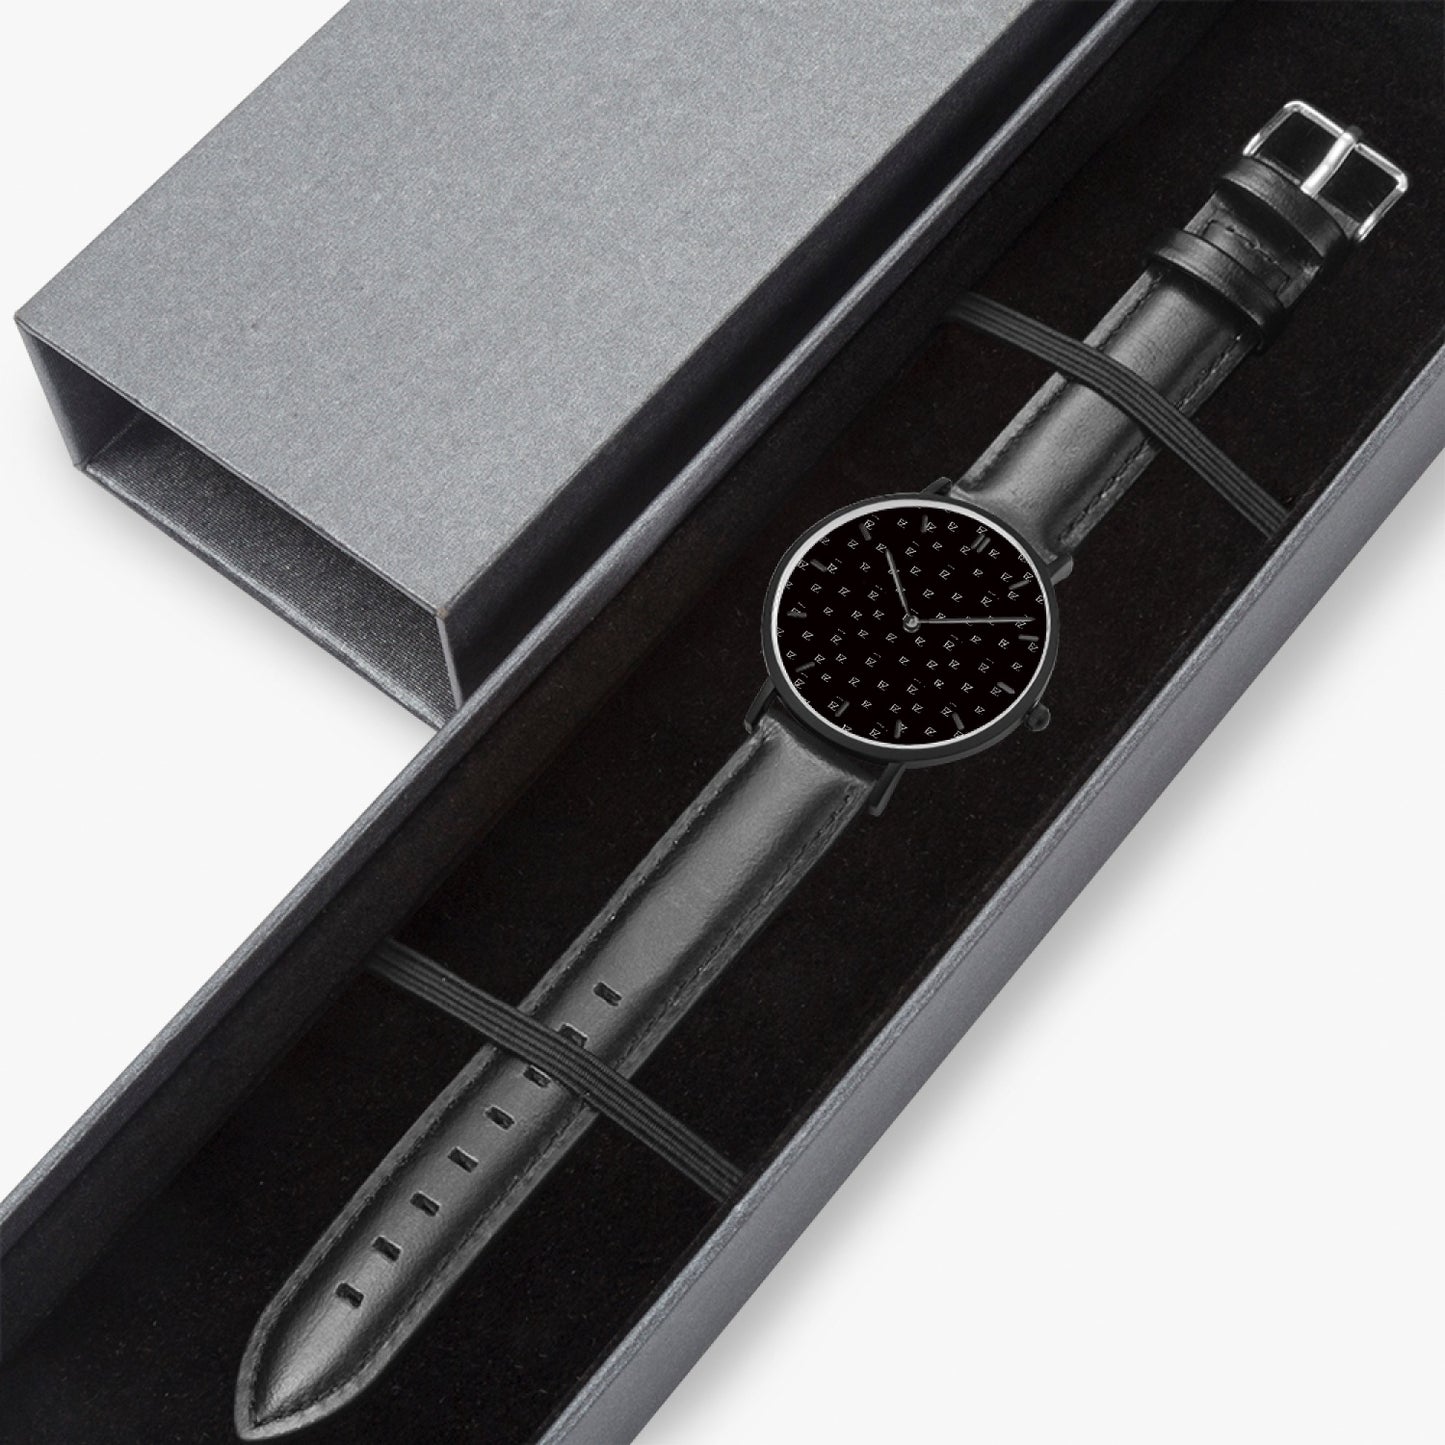 FZ Unisex Ultra-Thin Leather Strap Quartz Watch (Black With Indicators)